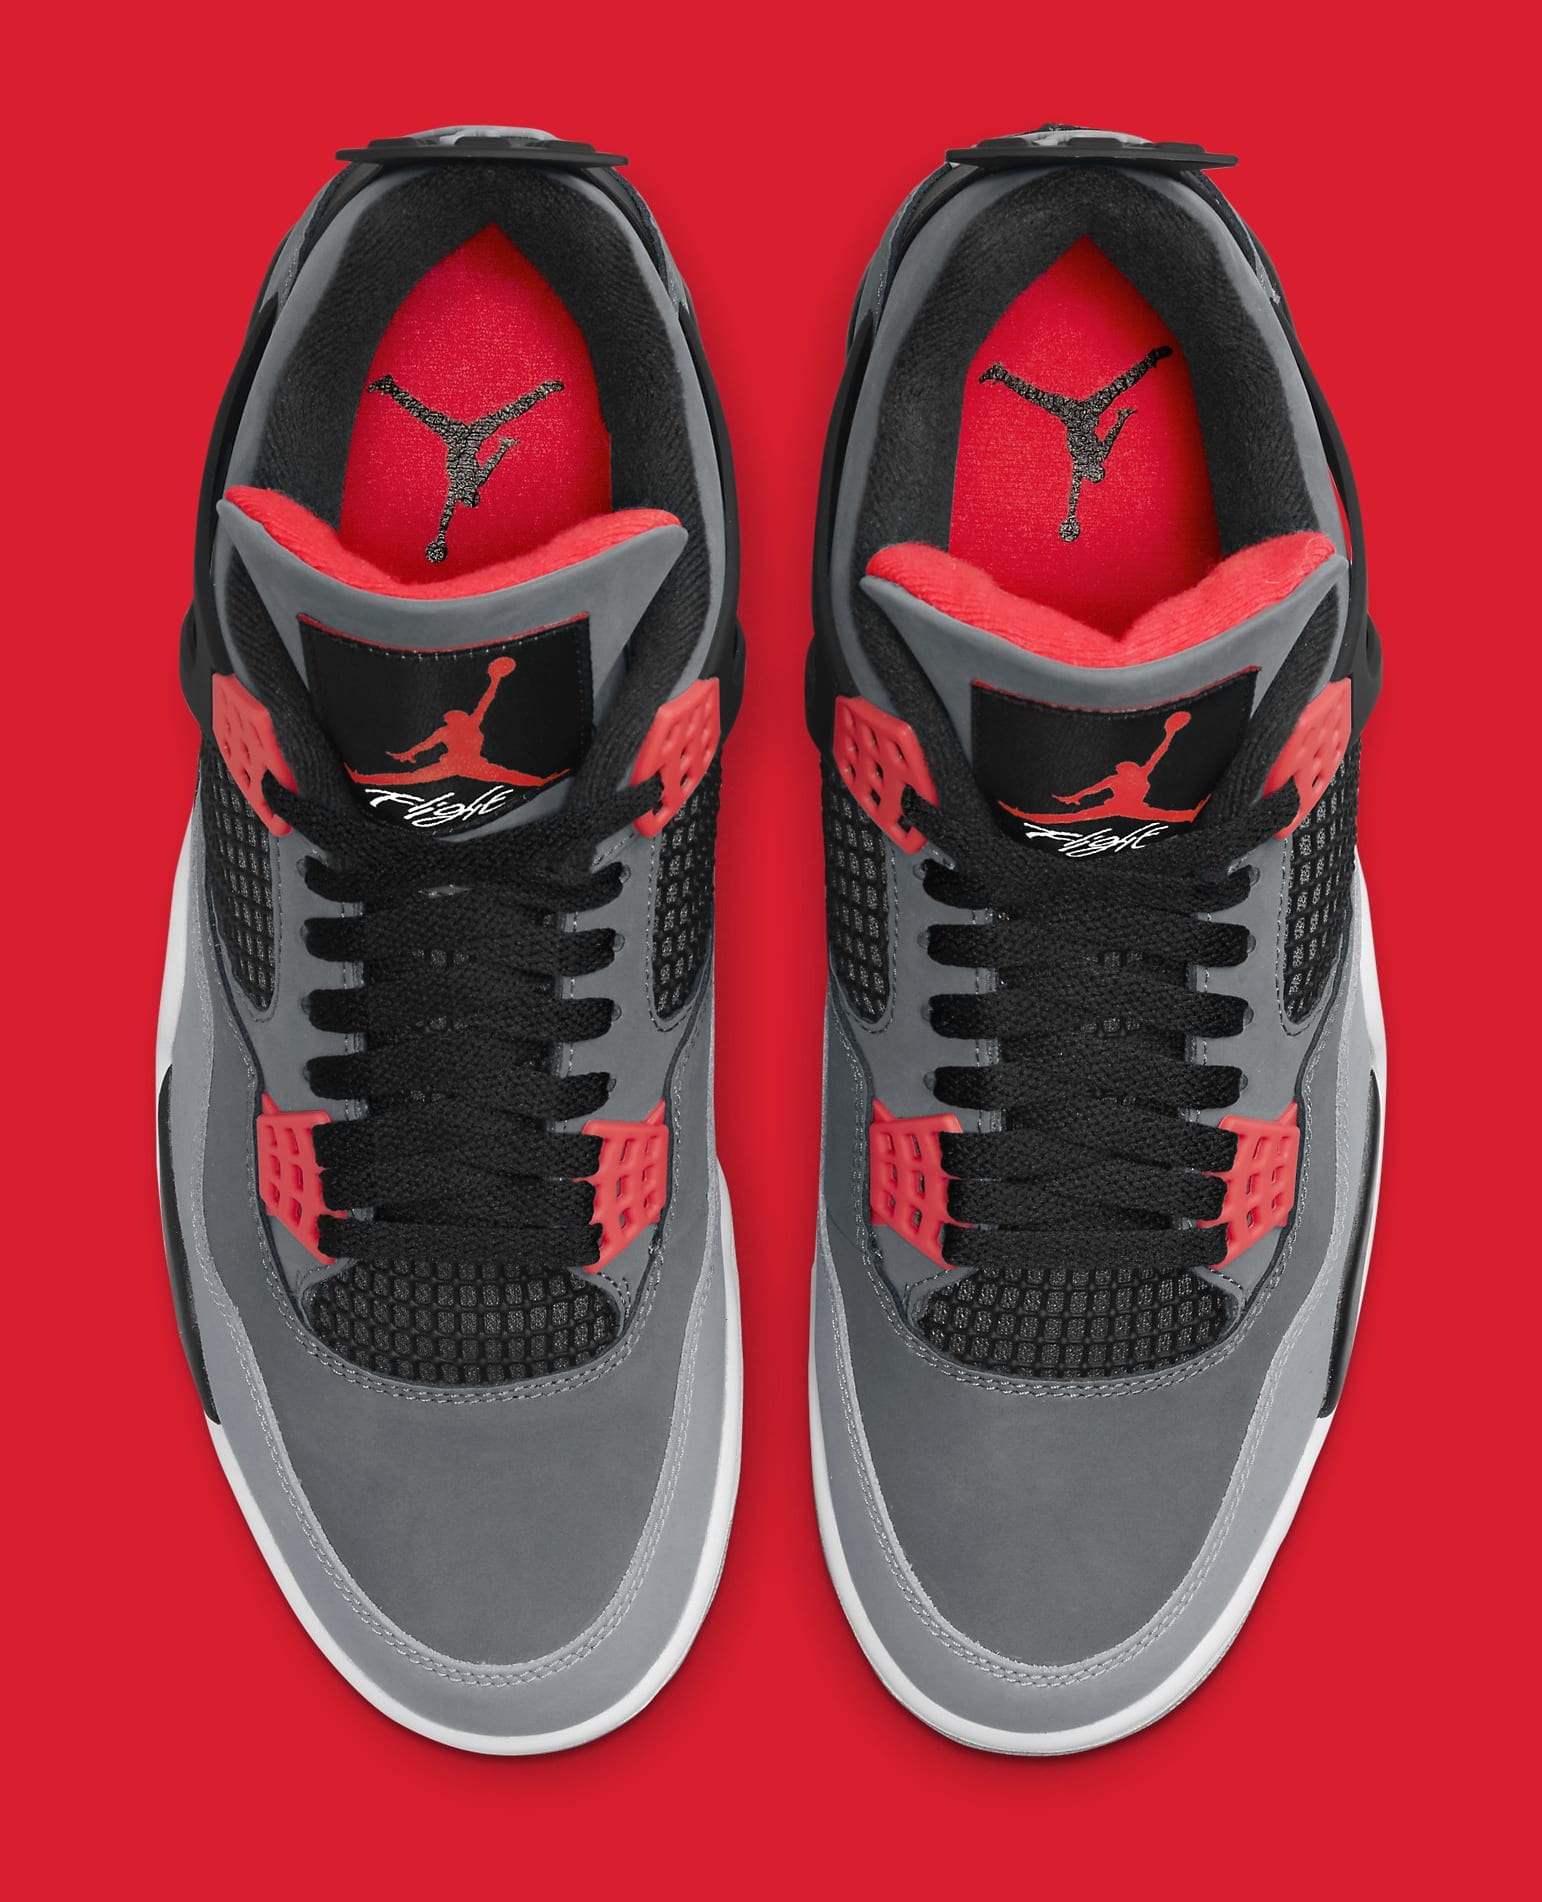 SALE定番Nike Air Jordan 4 Retro Infrared 23 aj4 スニーカー